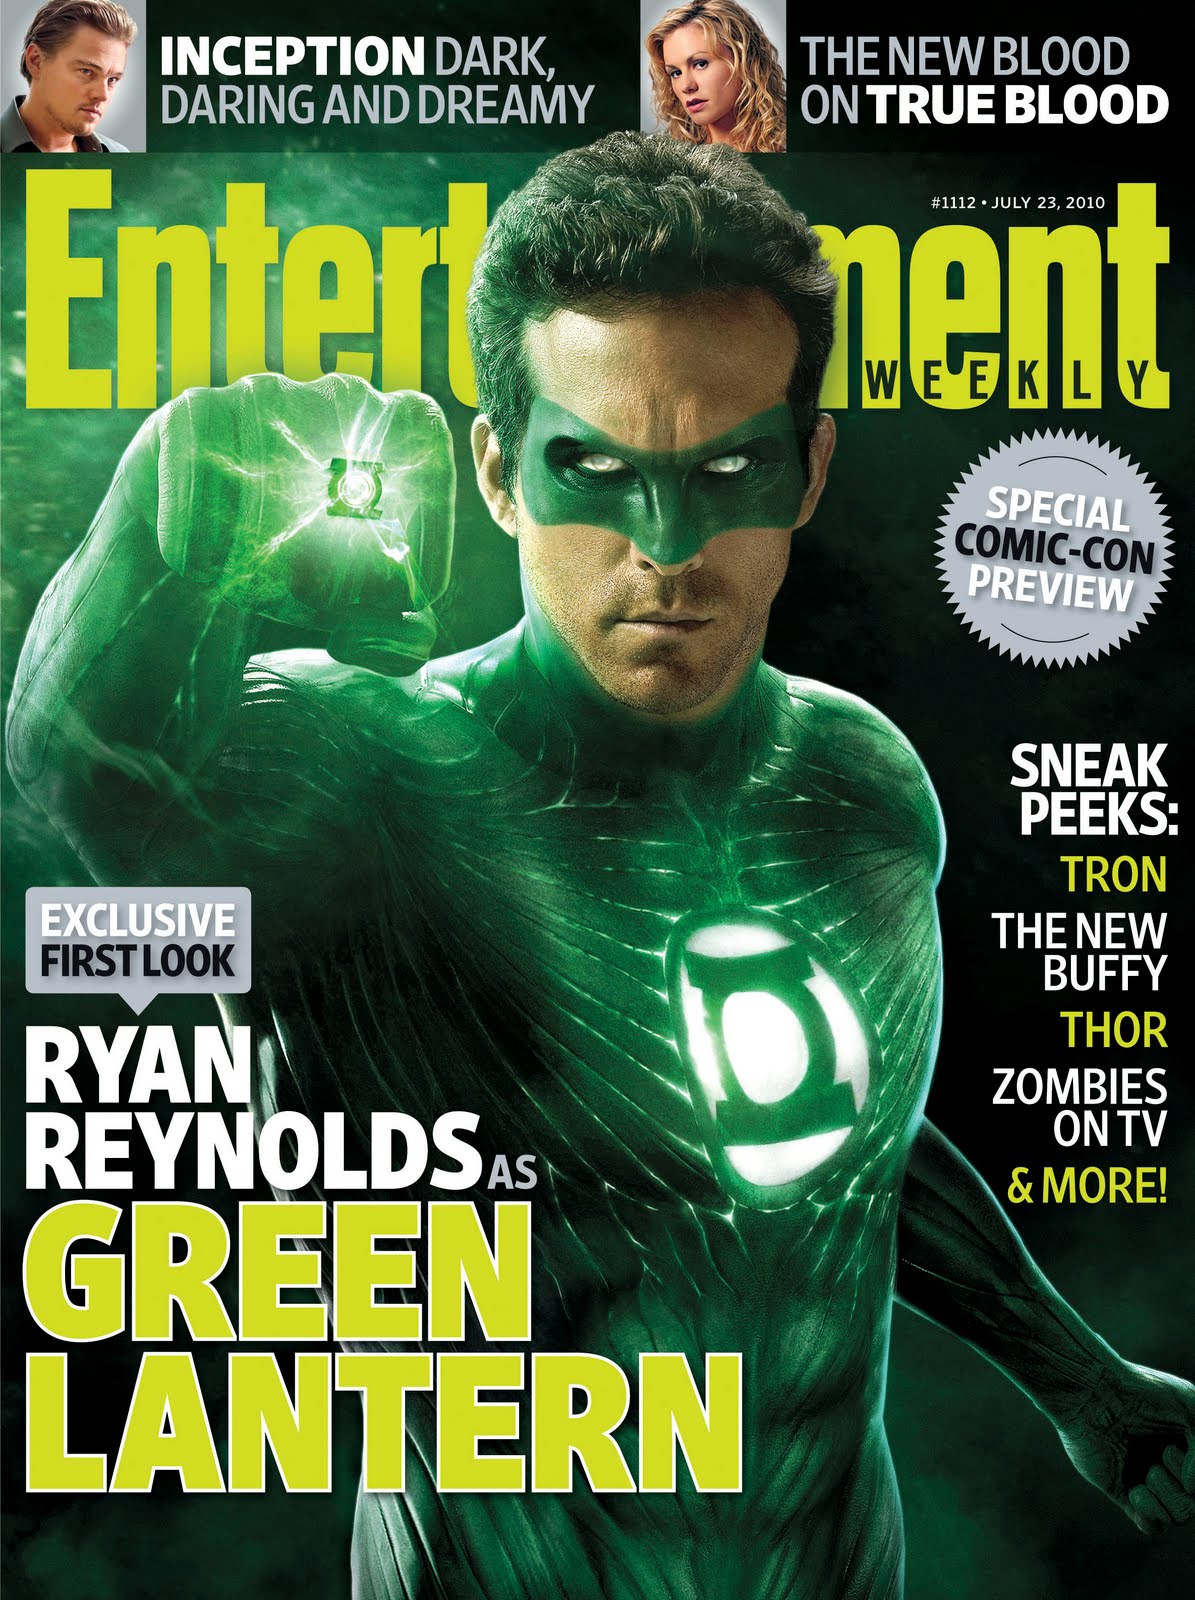 https://blogger.googleusercontent.com/img/b/R29vZ2xl/AVvXsEhZx6s30fSFuz3ArpqsXGFJHCNDSWS42agKpHcmHm4WZW4RhczWJNVuzbbqw8FQwru2kDuNZy5w1VIyhMvVPg9C4dqeAI9aVDoLlvEhivJZyWlW3qC0CsTJ1BegIYpiitKEo_TTAdMVF_s/s1600/Green-Lantern-costume-Ryan-Reynolds.jpg